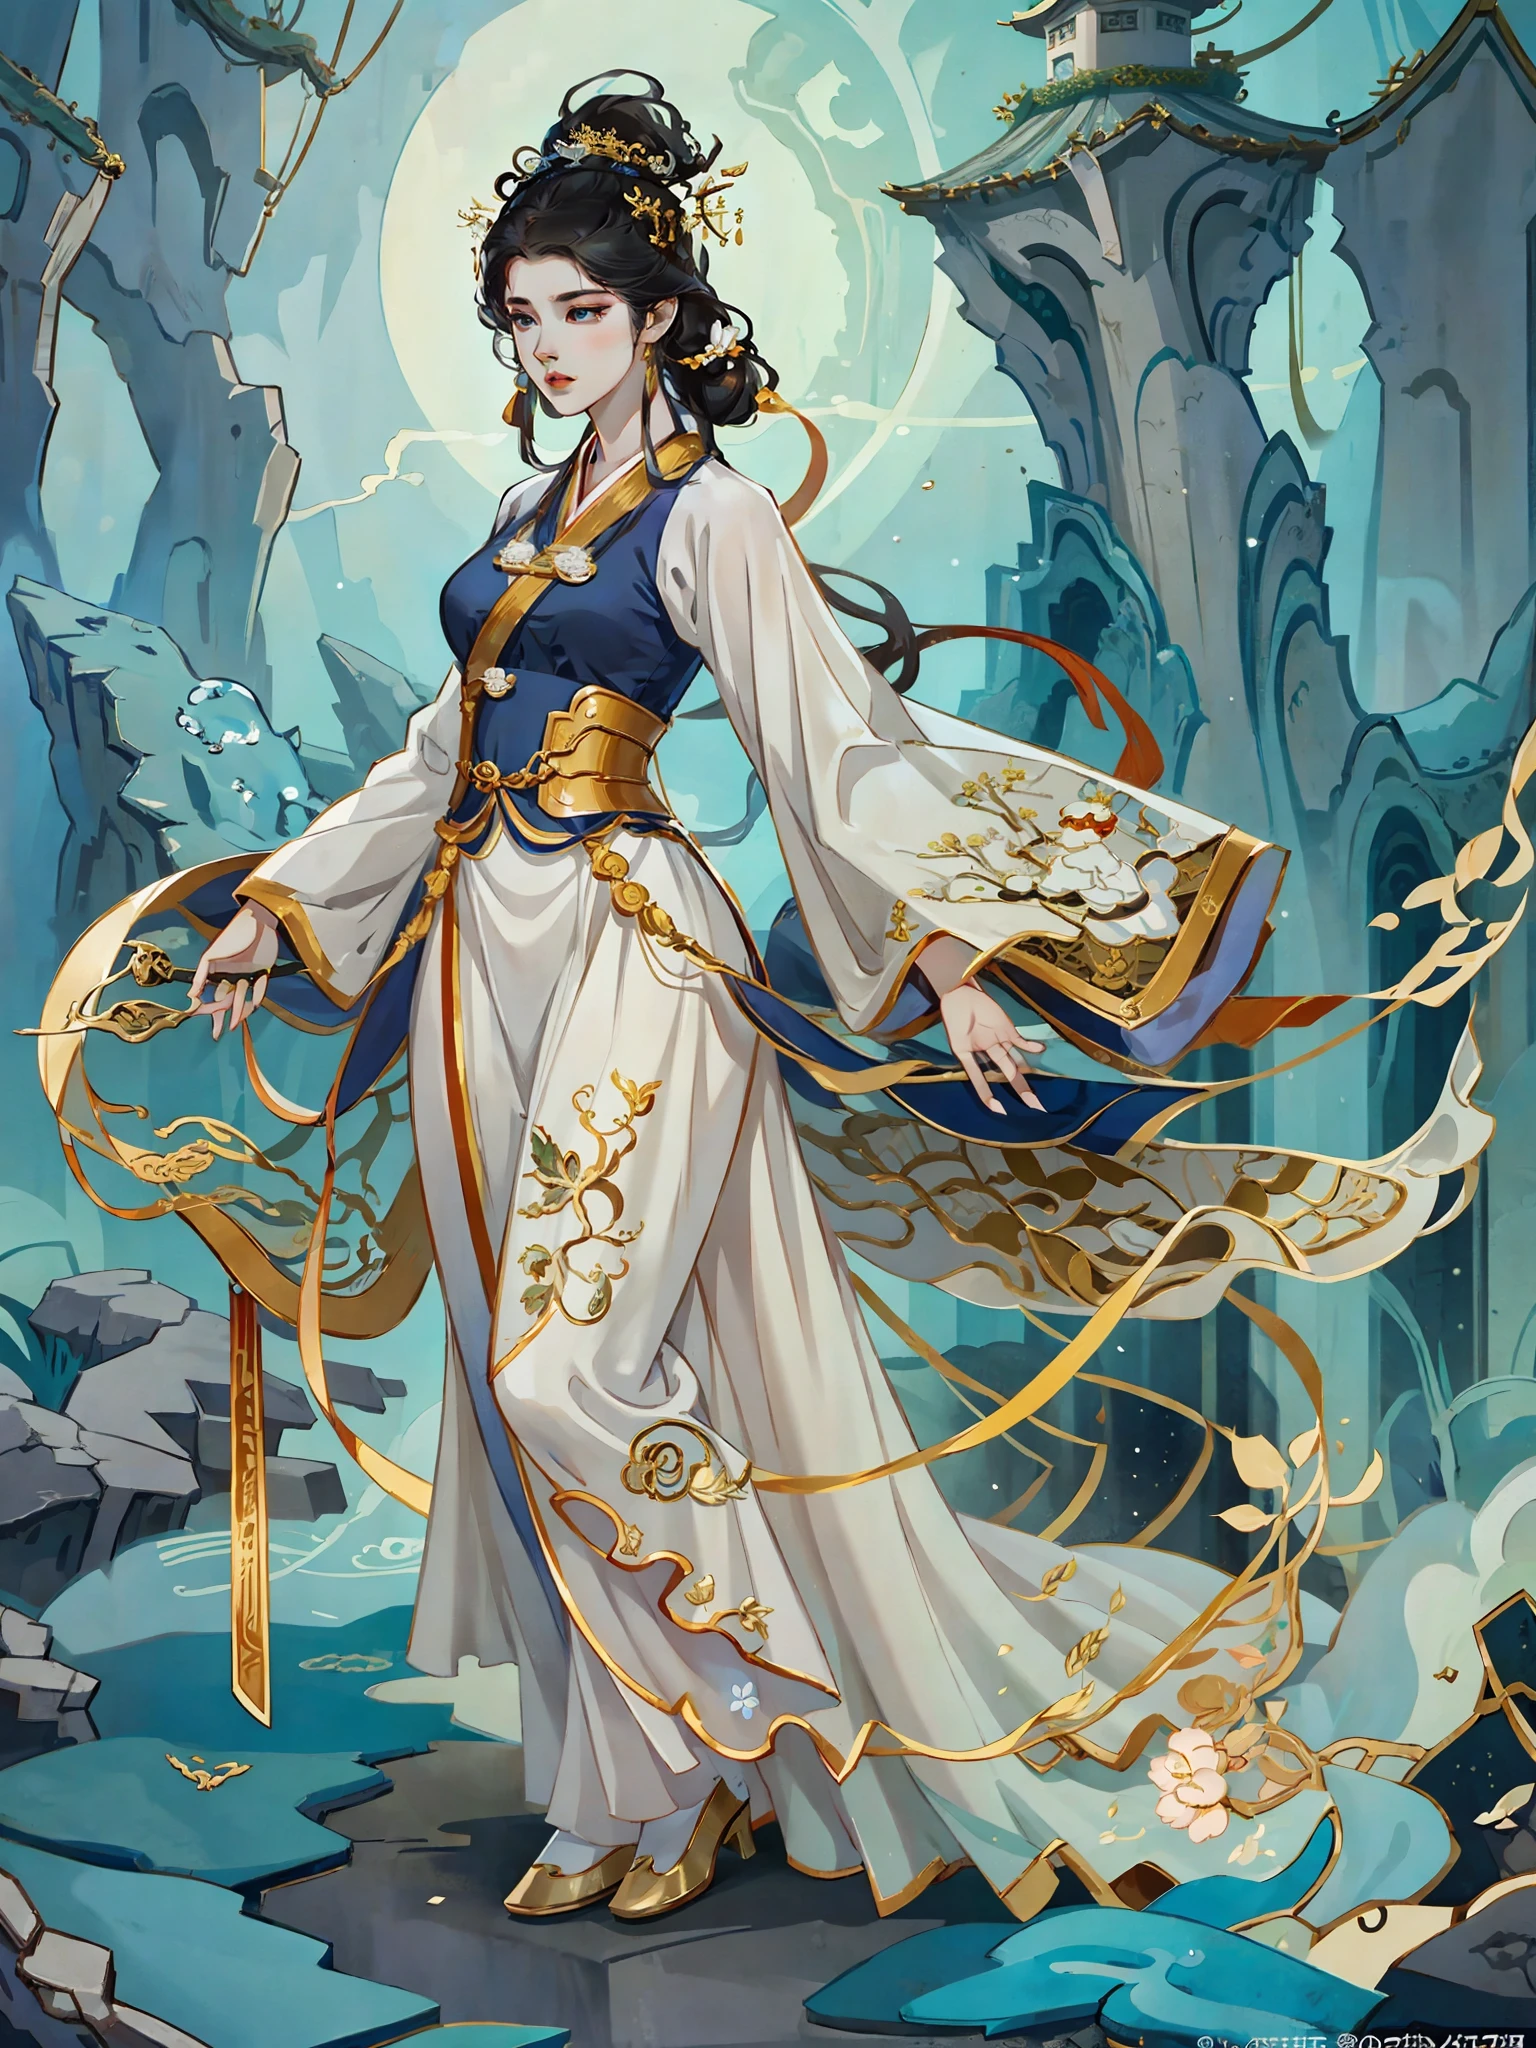 a close up of a woman in a white dress with a sword, full body xianxia, yun ling, queen of the sea mu yanling, game cg, a beautiful fantasy empress, inspired by Li Mei-shu, trending on cgstation, xianxia fantasy, xianxia, inspired by Lan Ying, xianxia hero, yang qi --auto --s2